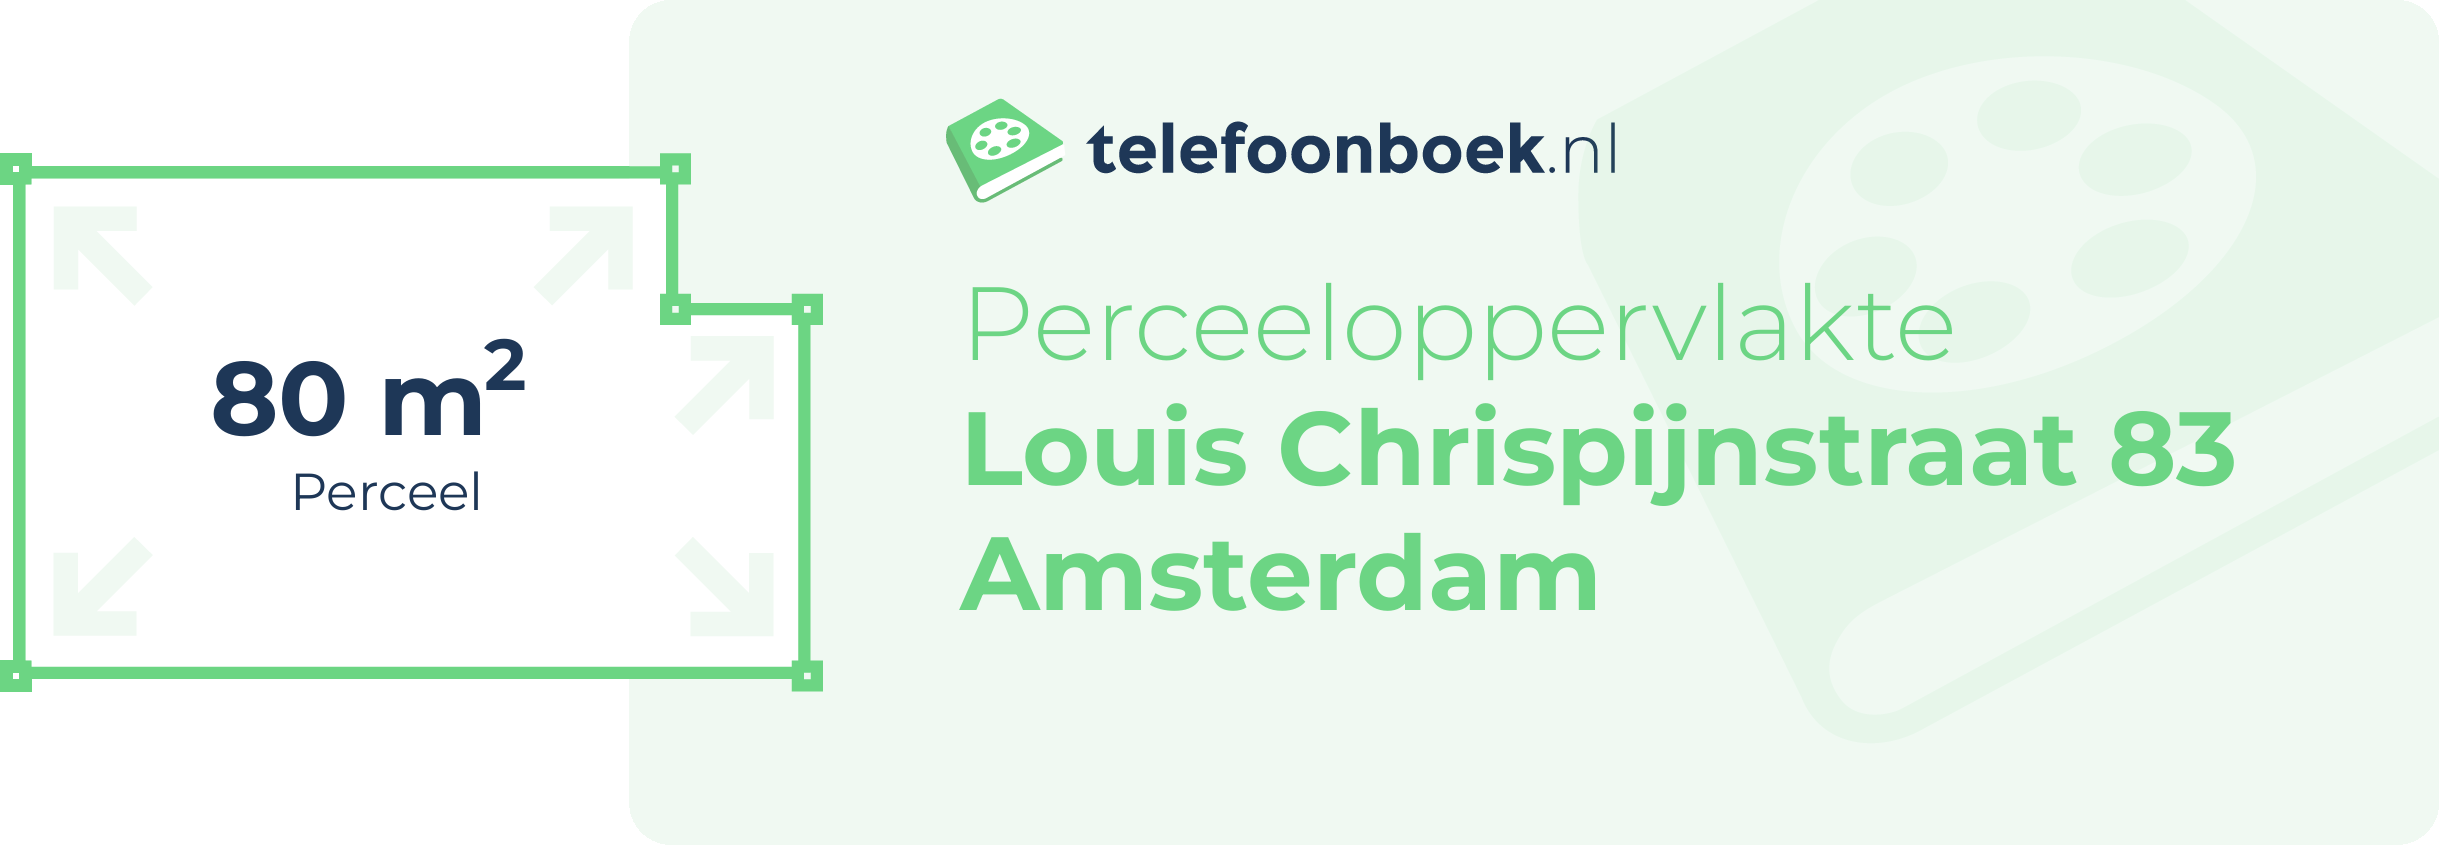 Perceeloppervlakte Louis Chrispijnstraat 83 Amsterdam